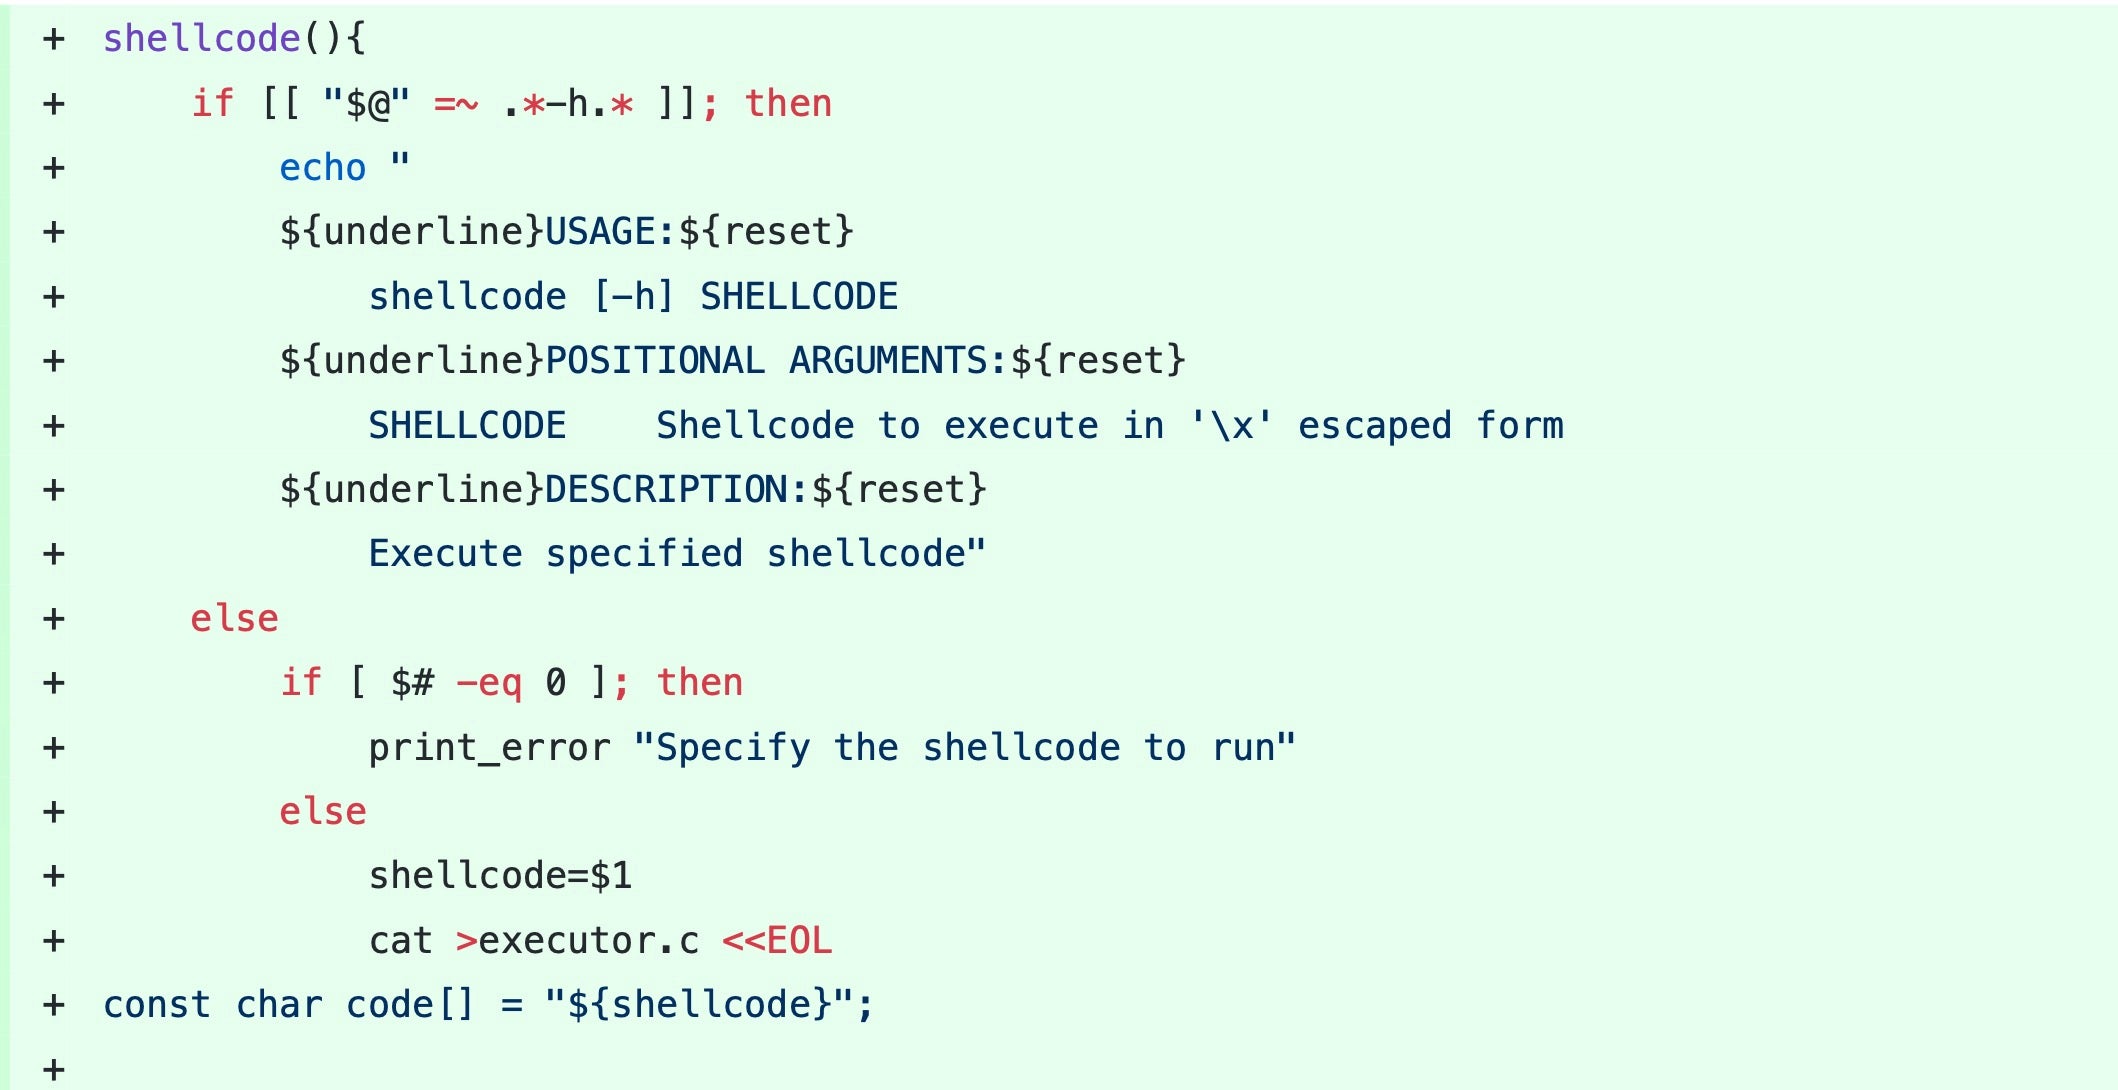 image of shellcode function